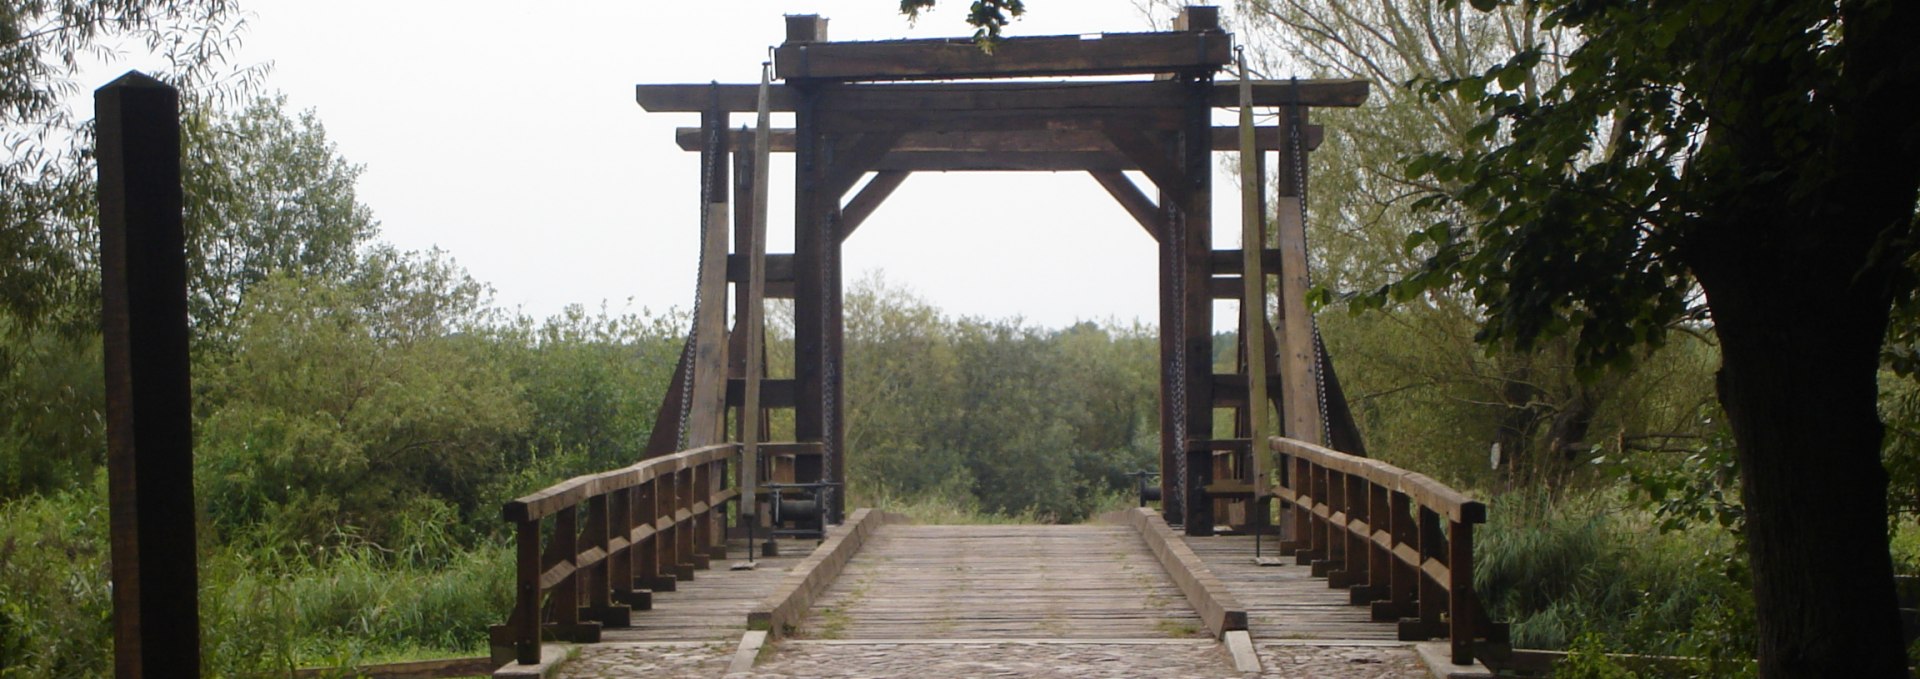 Holzzugbrücke Nehringen, © Tourismusverband Vorpommern e.V.